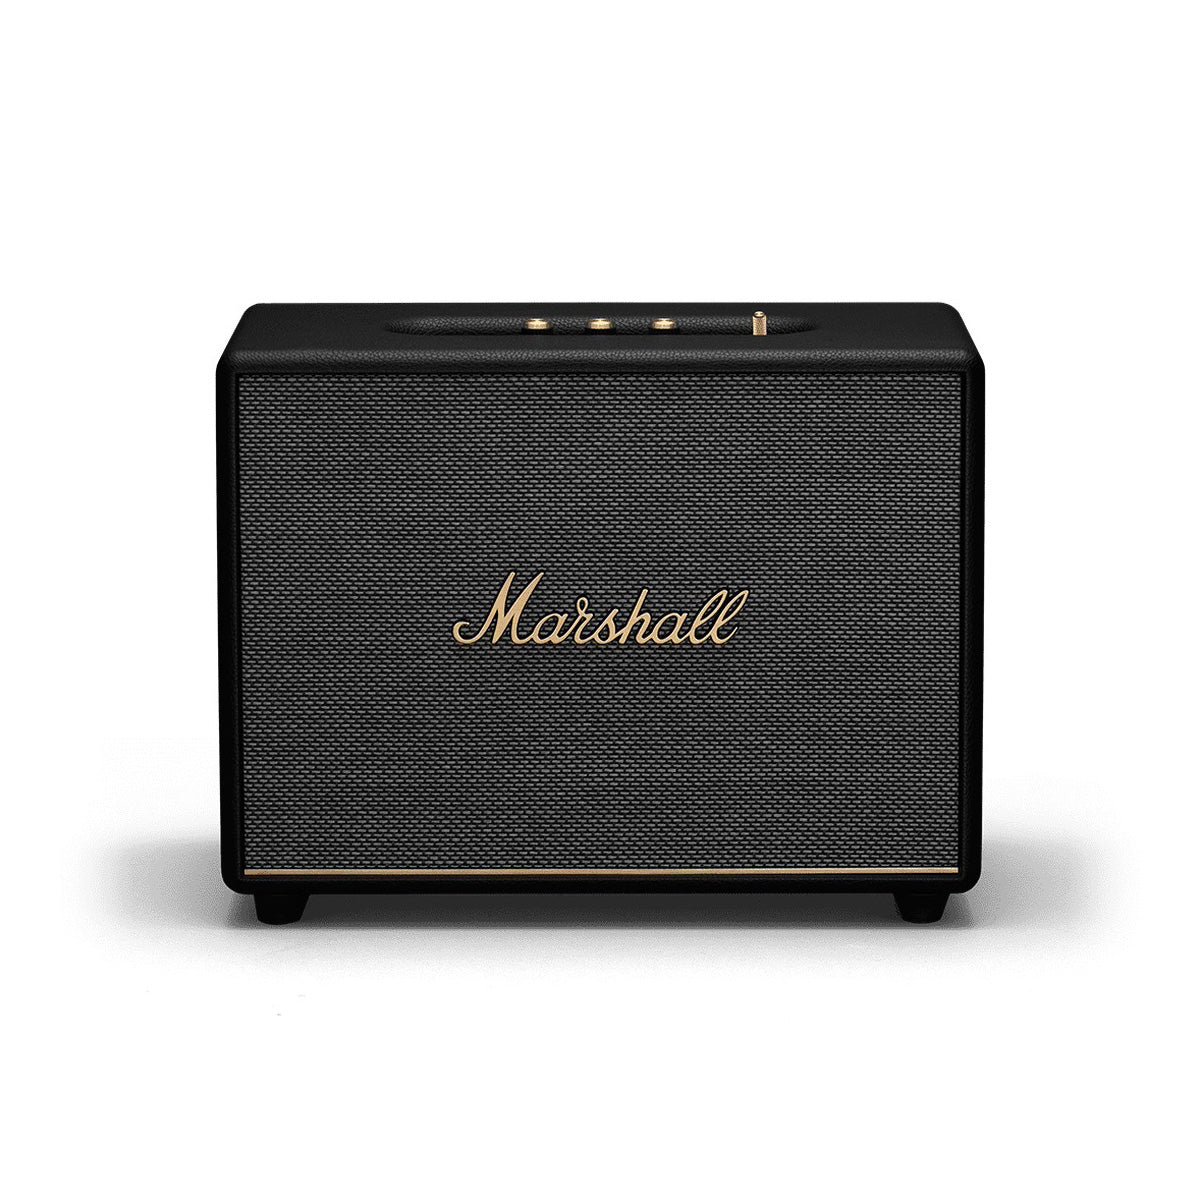 Marshall Woburn lll Wireless Speaker